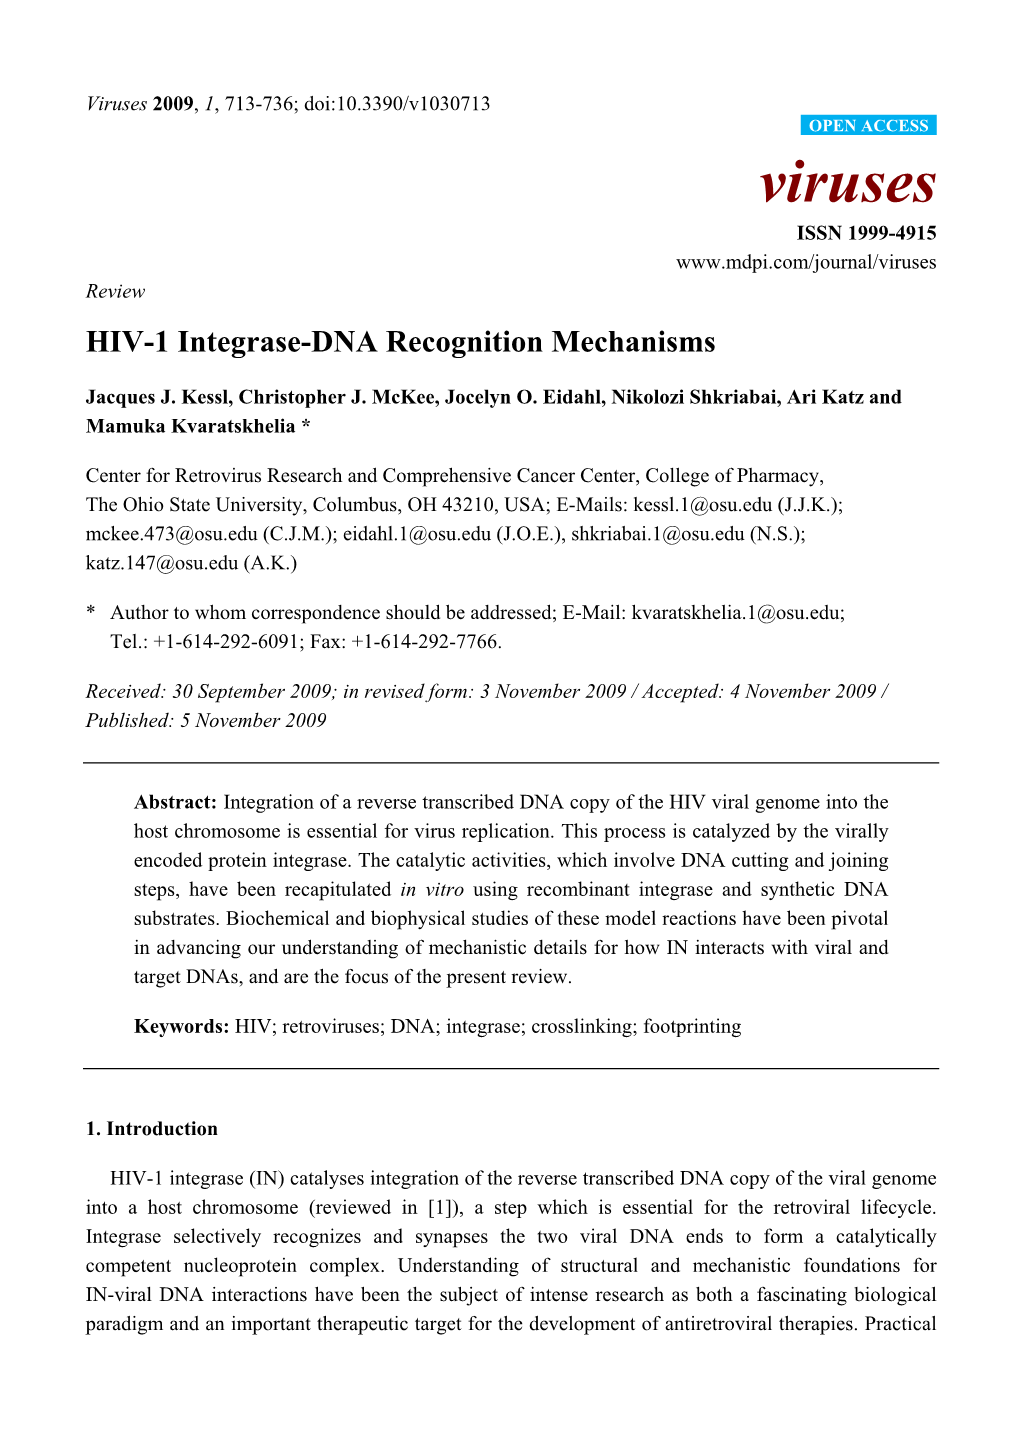 HIV-1 Integrase-DNA Recognition Mechanisms